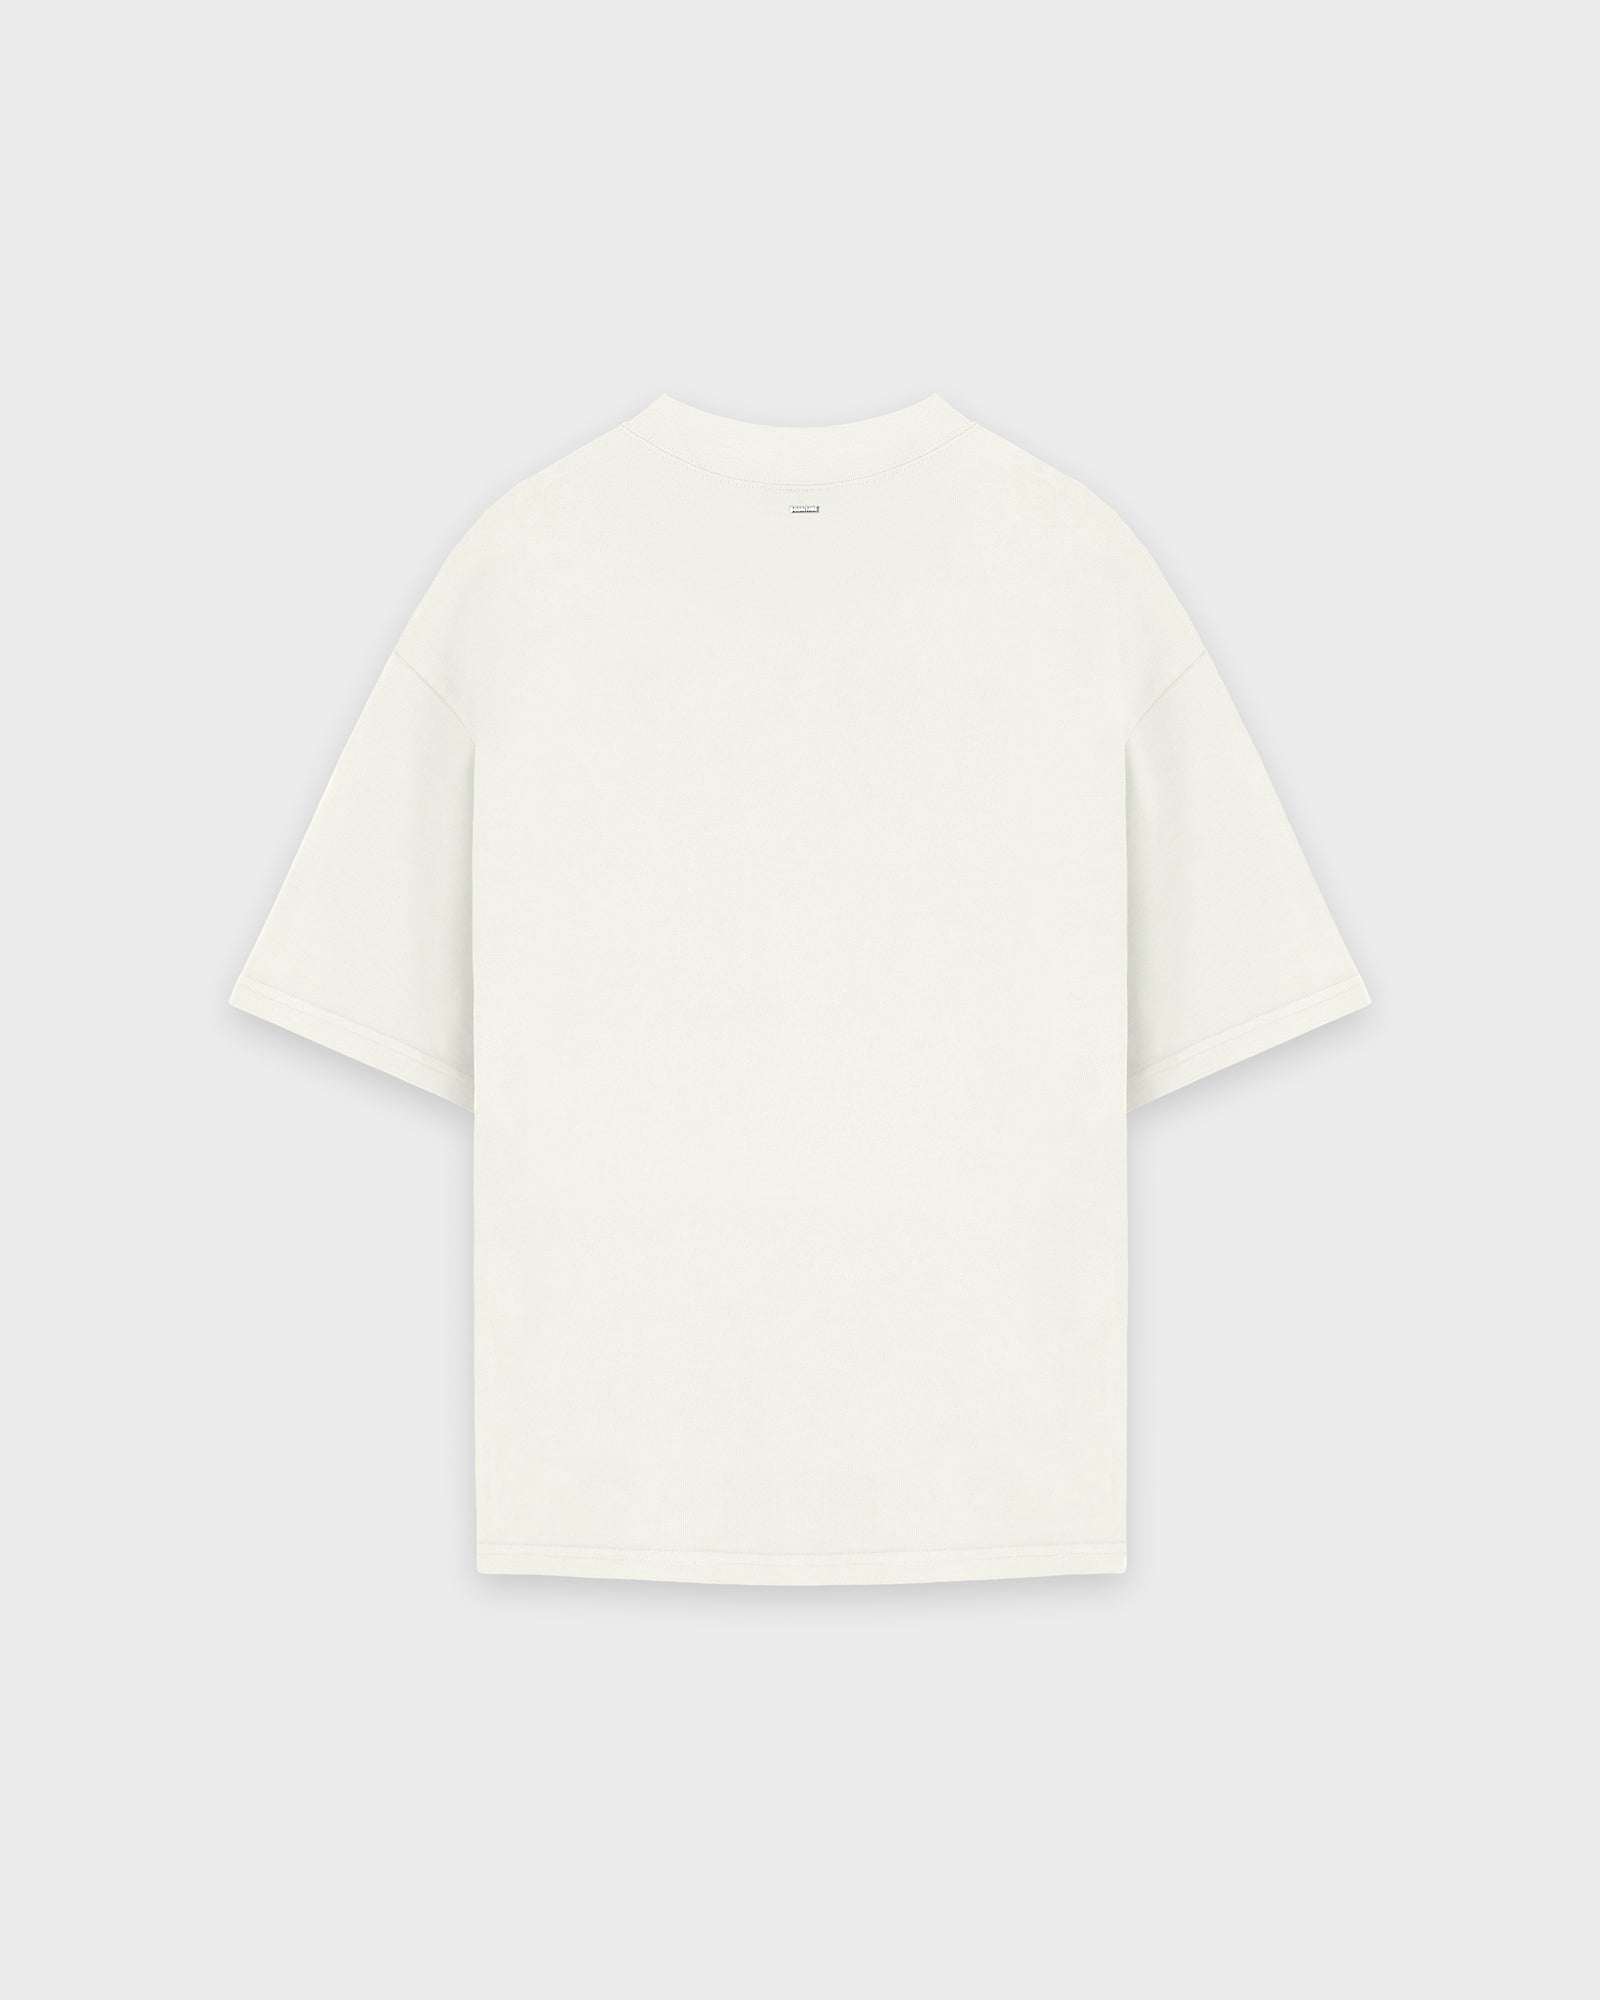 Heavy Off White Basic T-Shirt